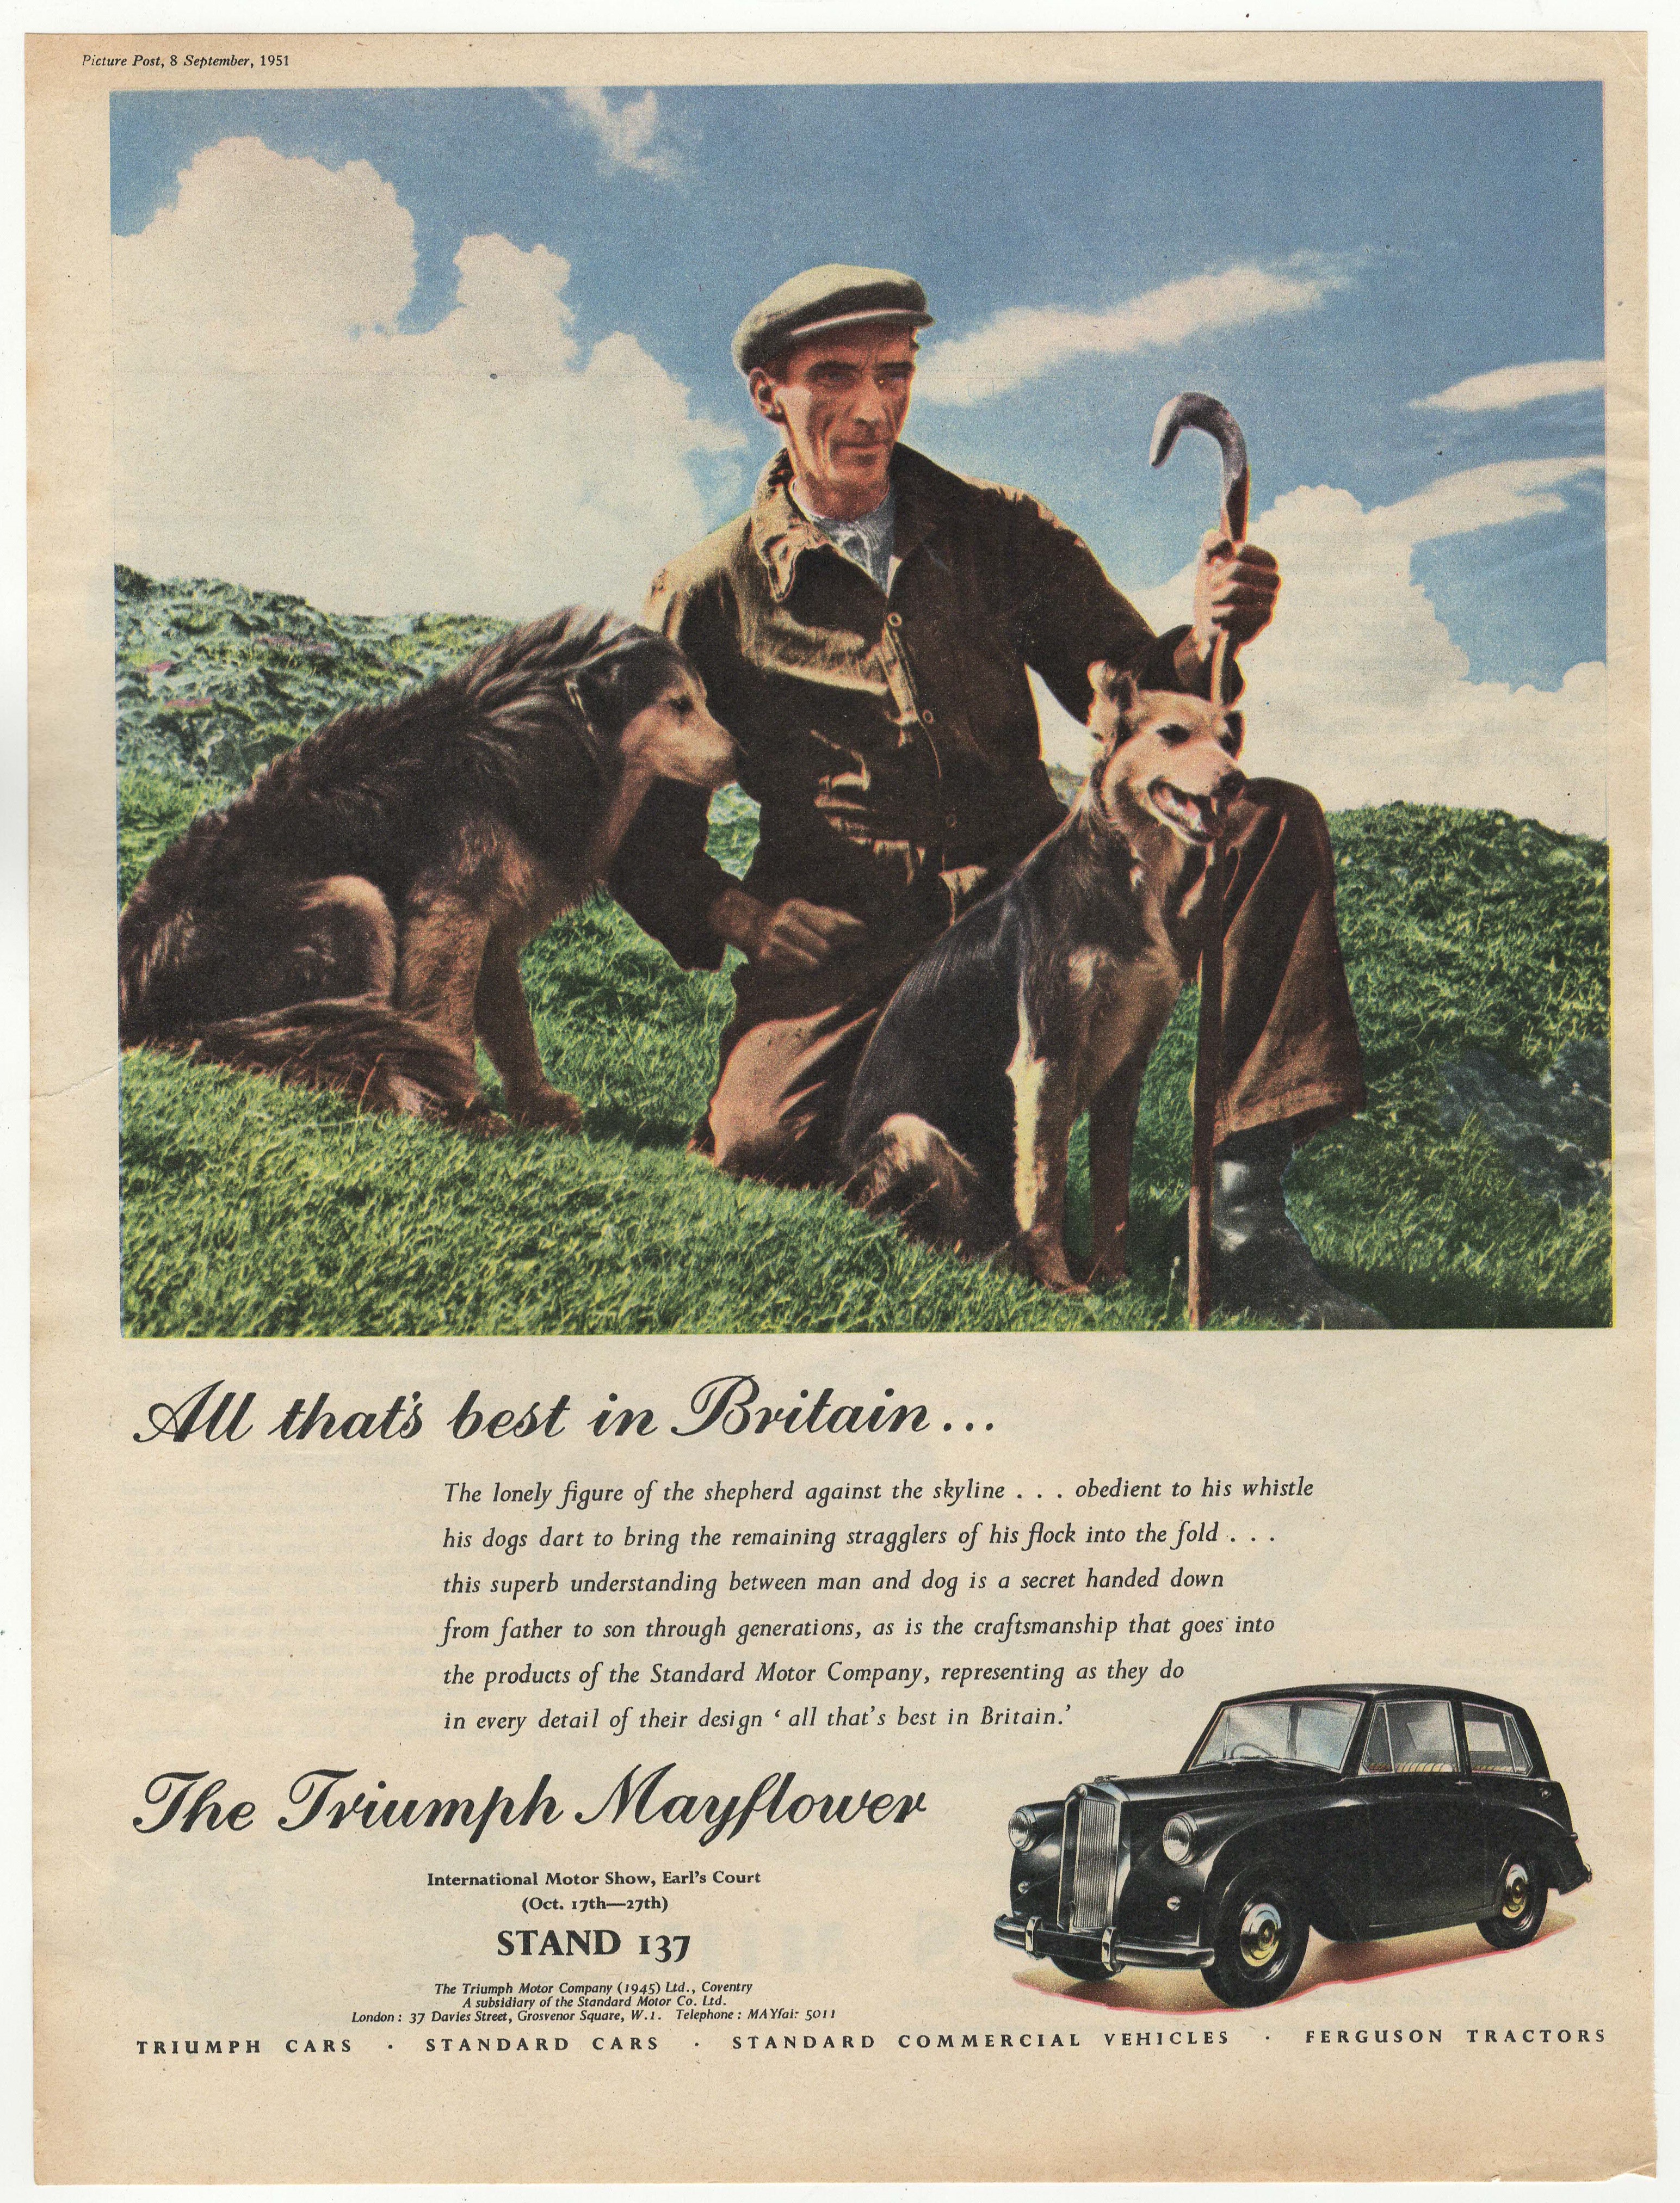 Triumph Mayflower-full page colour advertisement-International Motor Show-Earls Court 10" x 12.1/2"